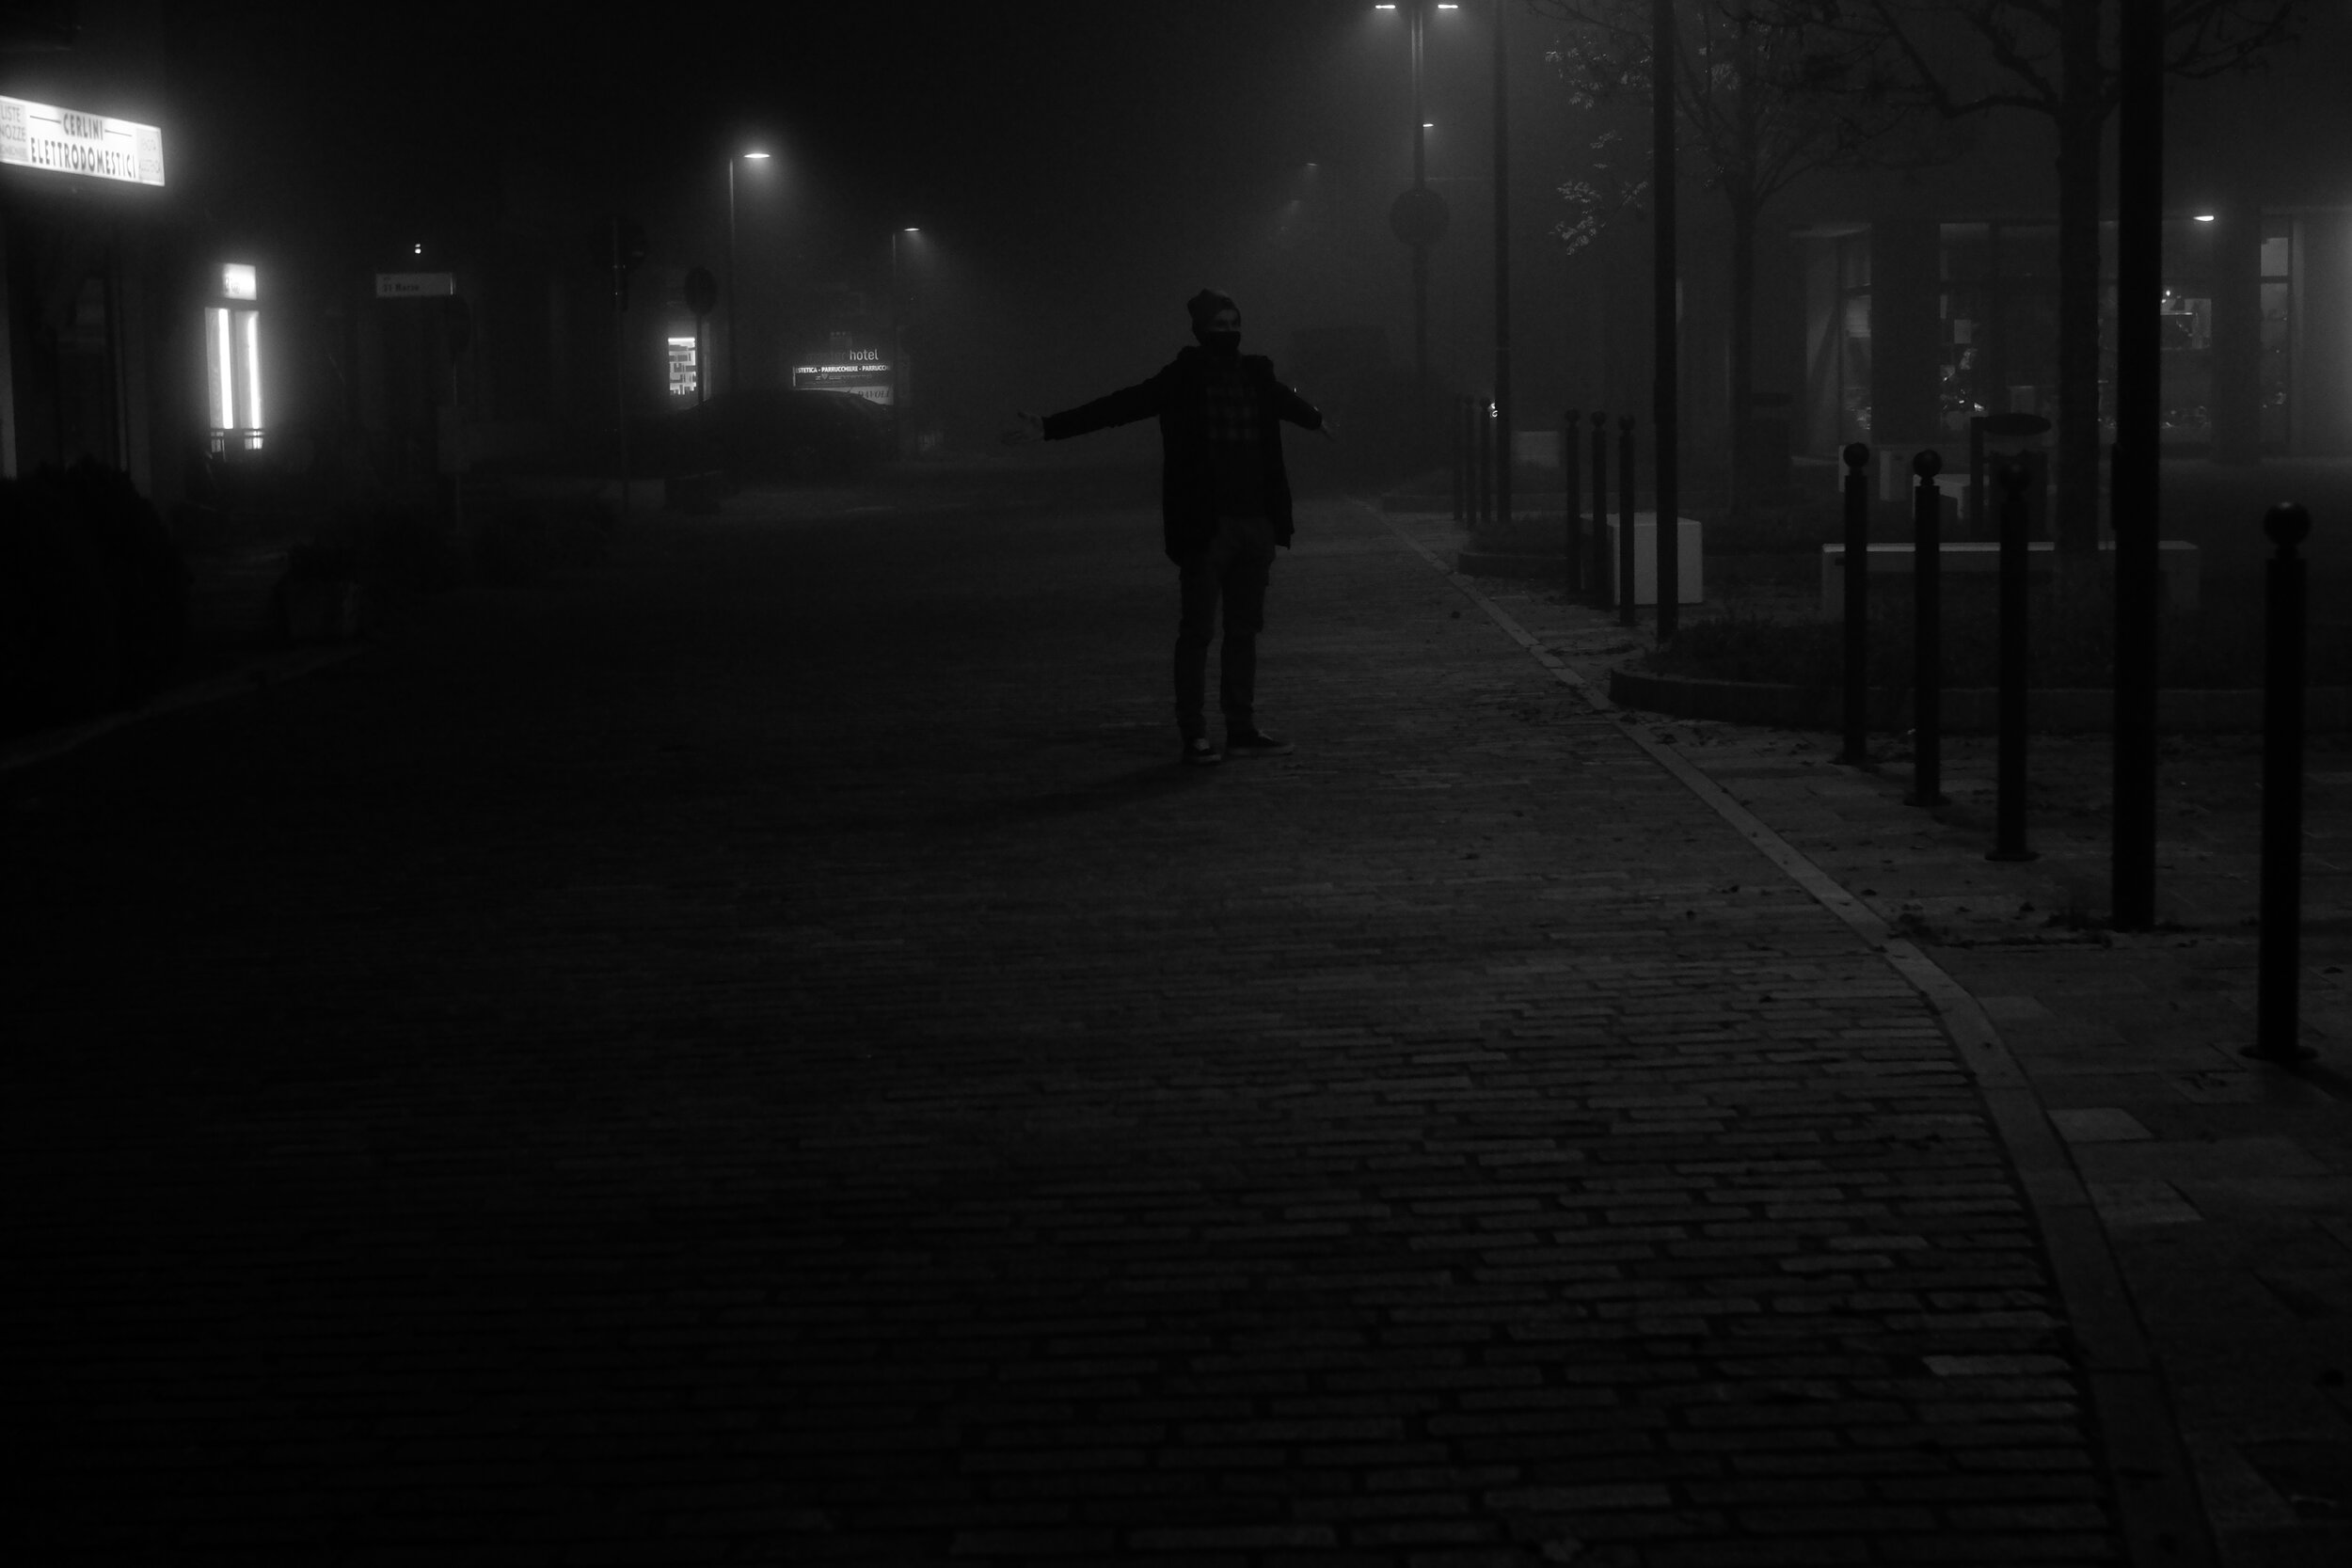 silhouette_of_person_walking_on_street_during_night_time-scopio-c7779c0b-289c-4ee2-a7bf-124baf42b8e3.jpg